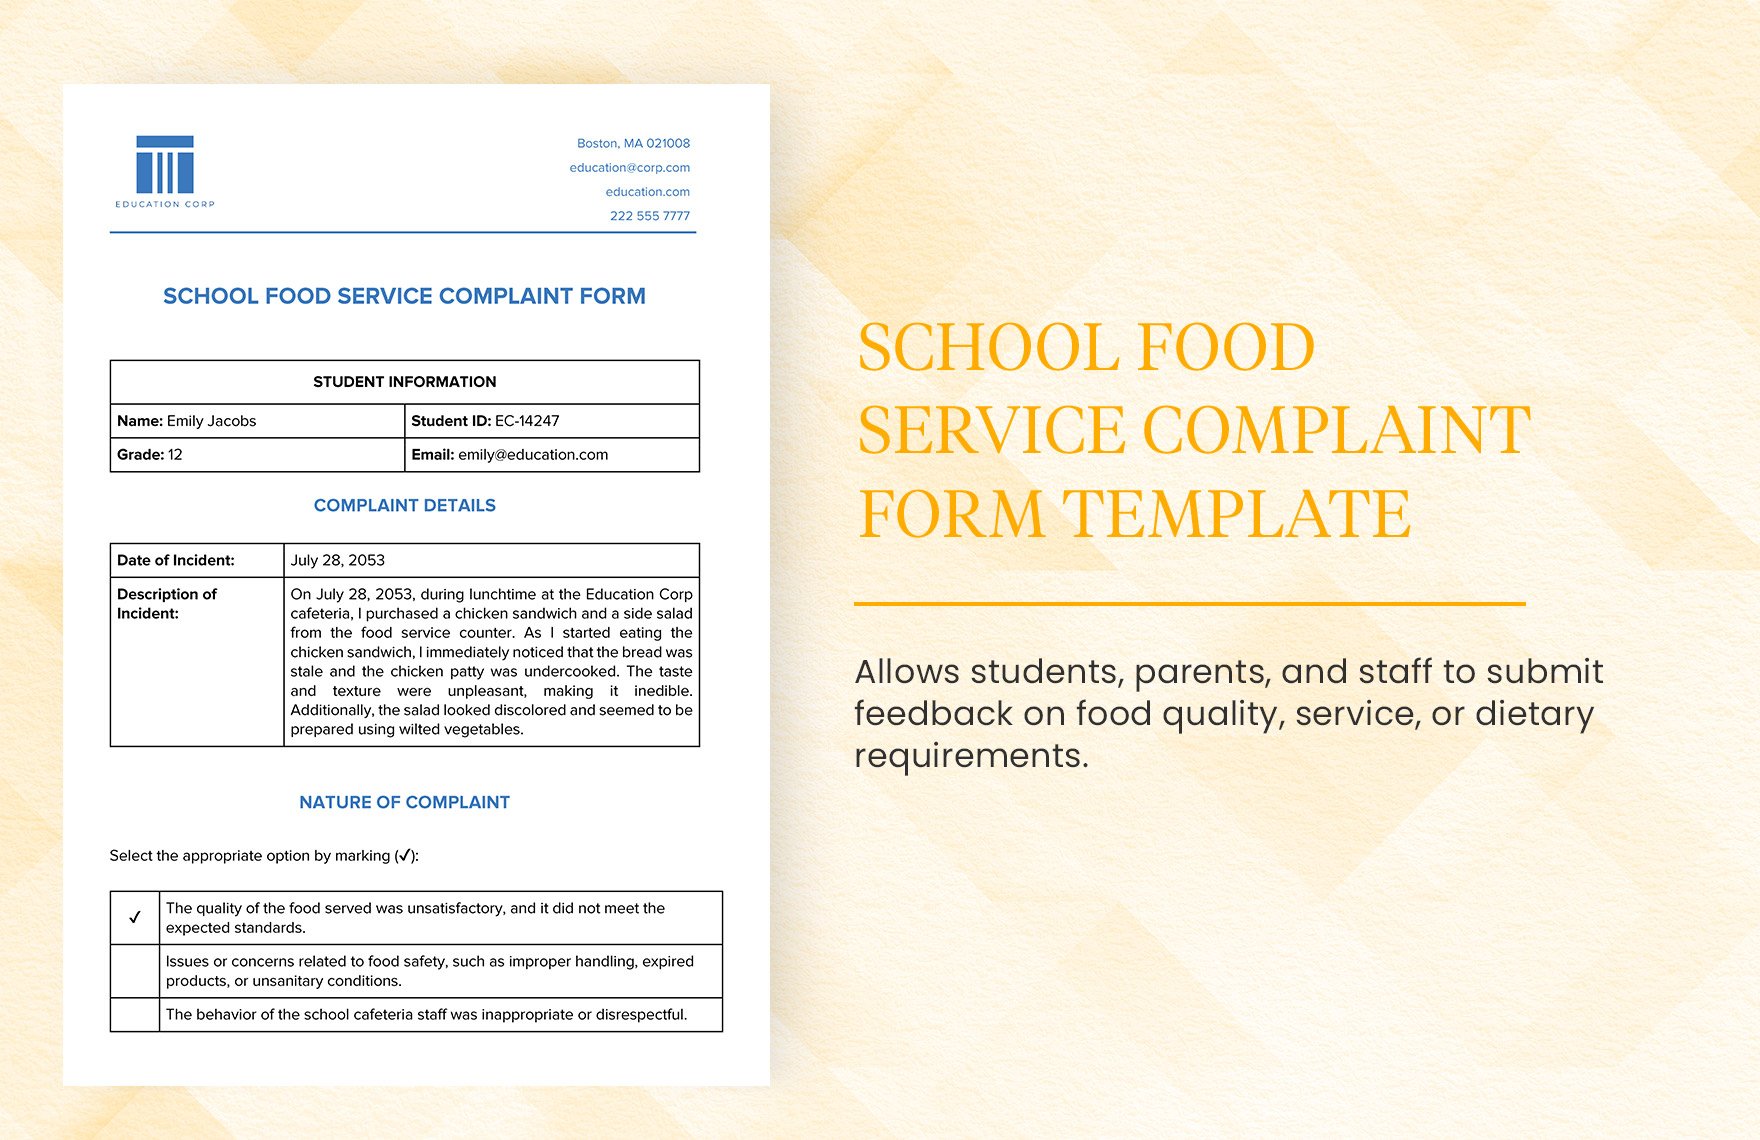 School Food Service Complaint Form Template